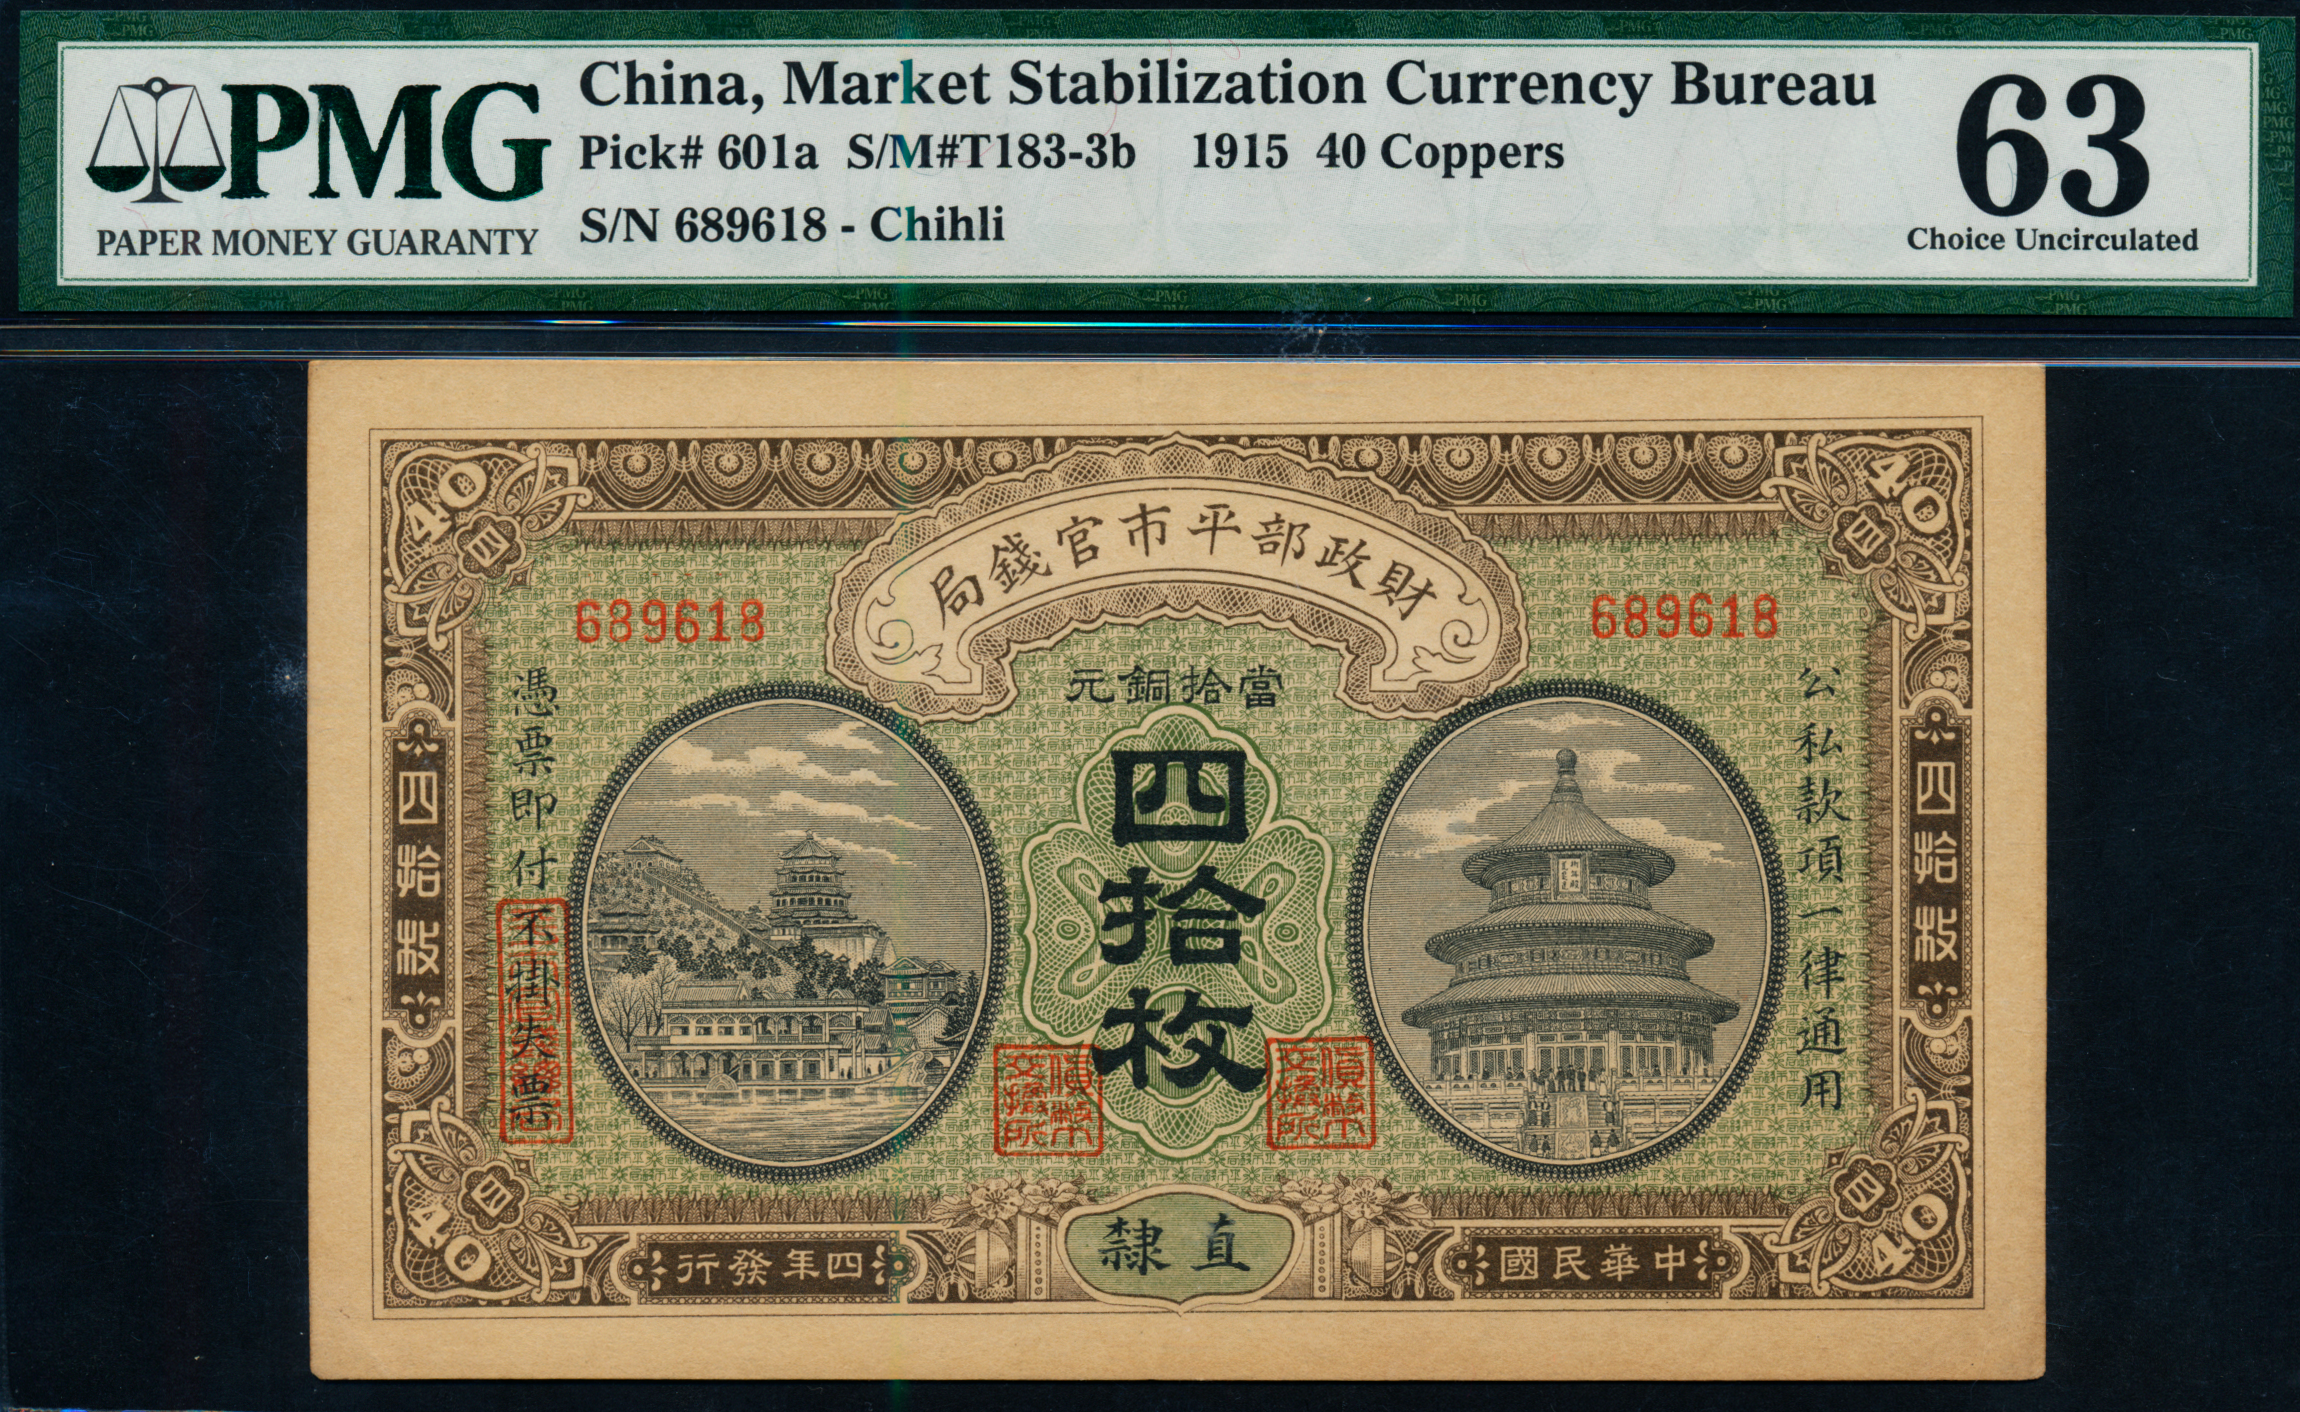 China Market Stabilization Currency Bureau 1915 40 Coppers 689618 